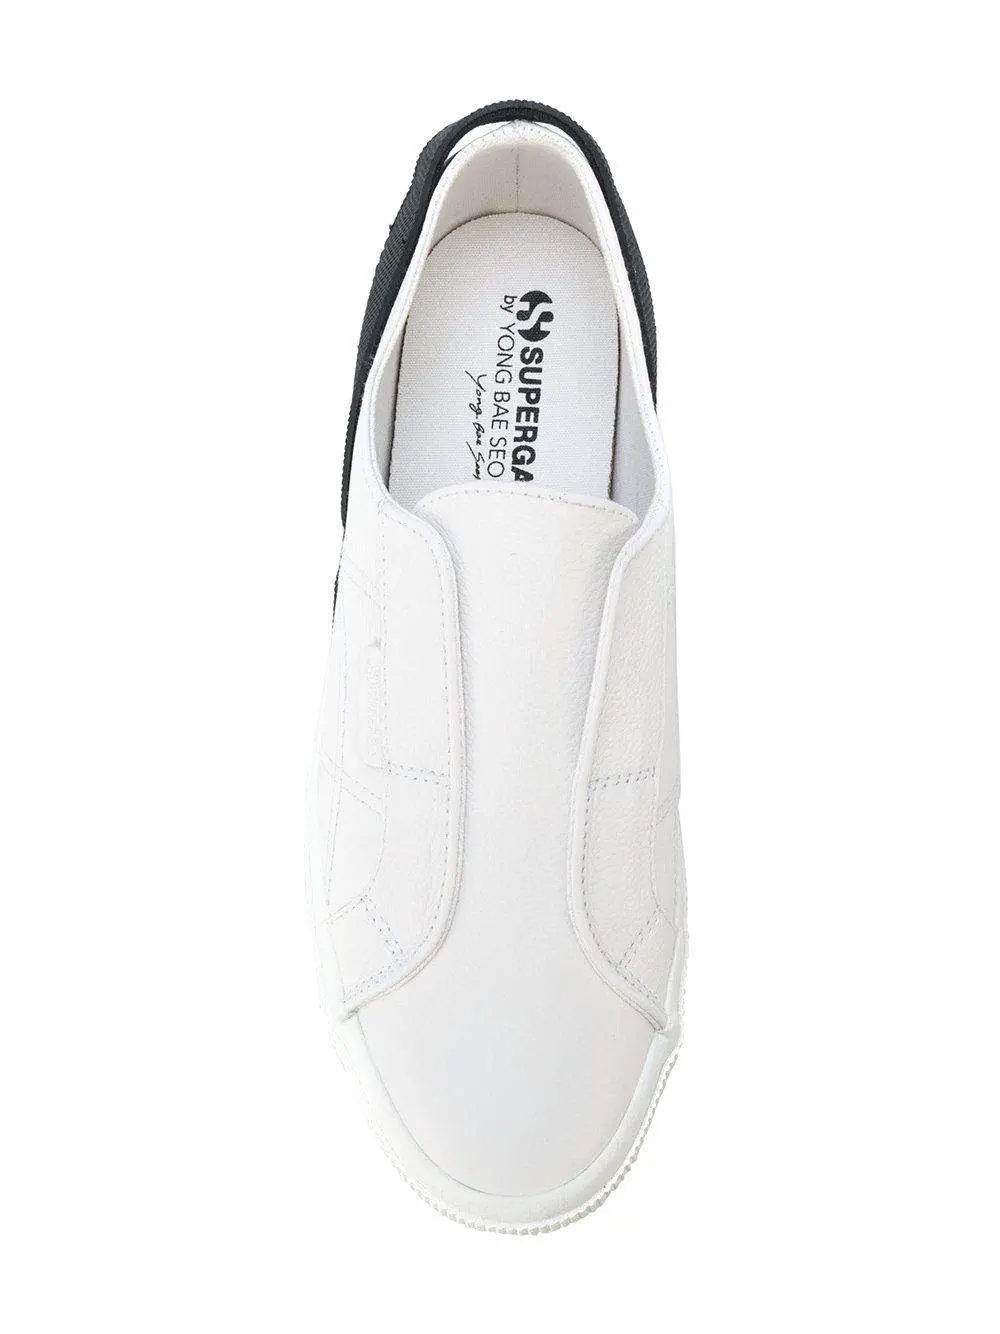 Superga Leather Slip On Sneakers in White for Men